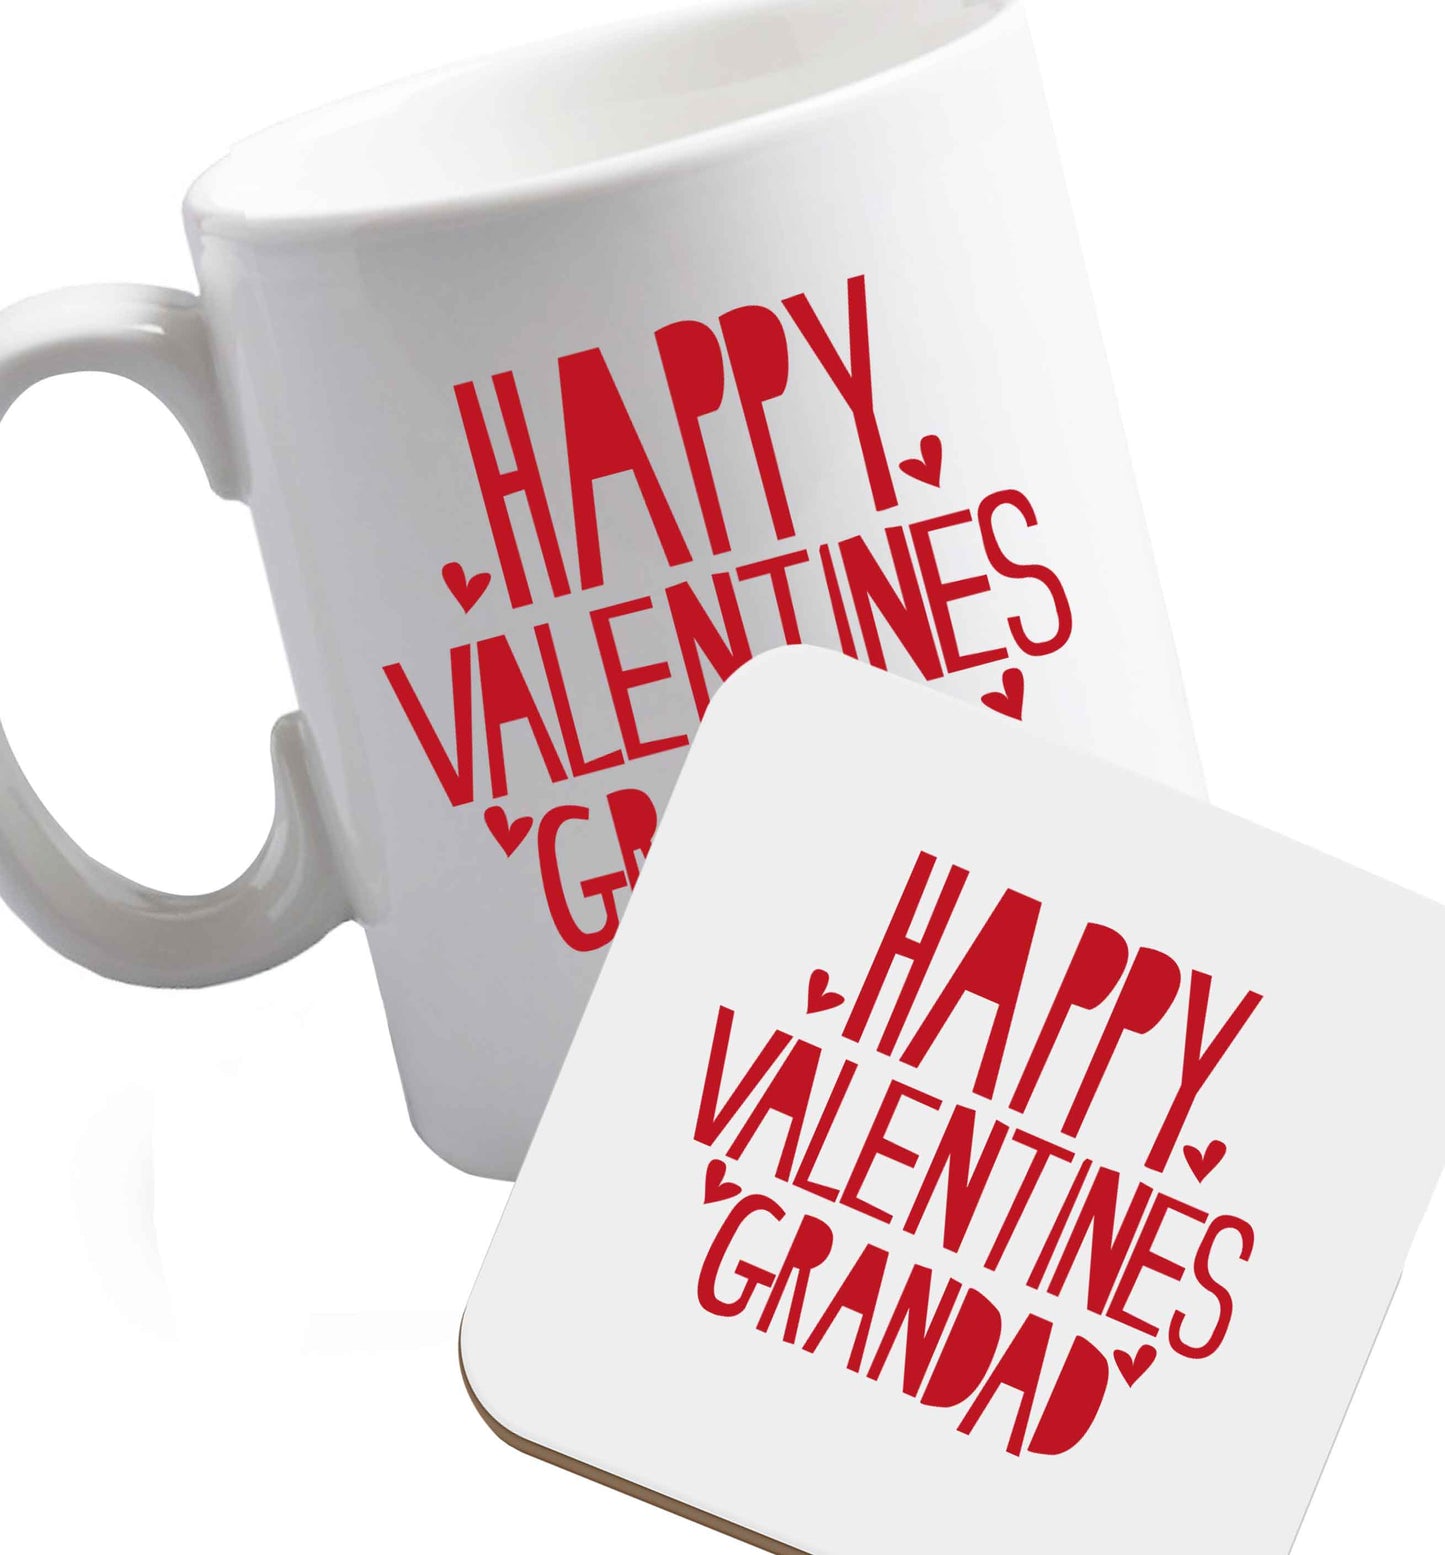 10 oz Happy valentines grandad ceramic mug and coaster set right handed